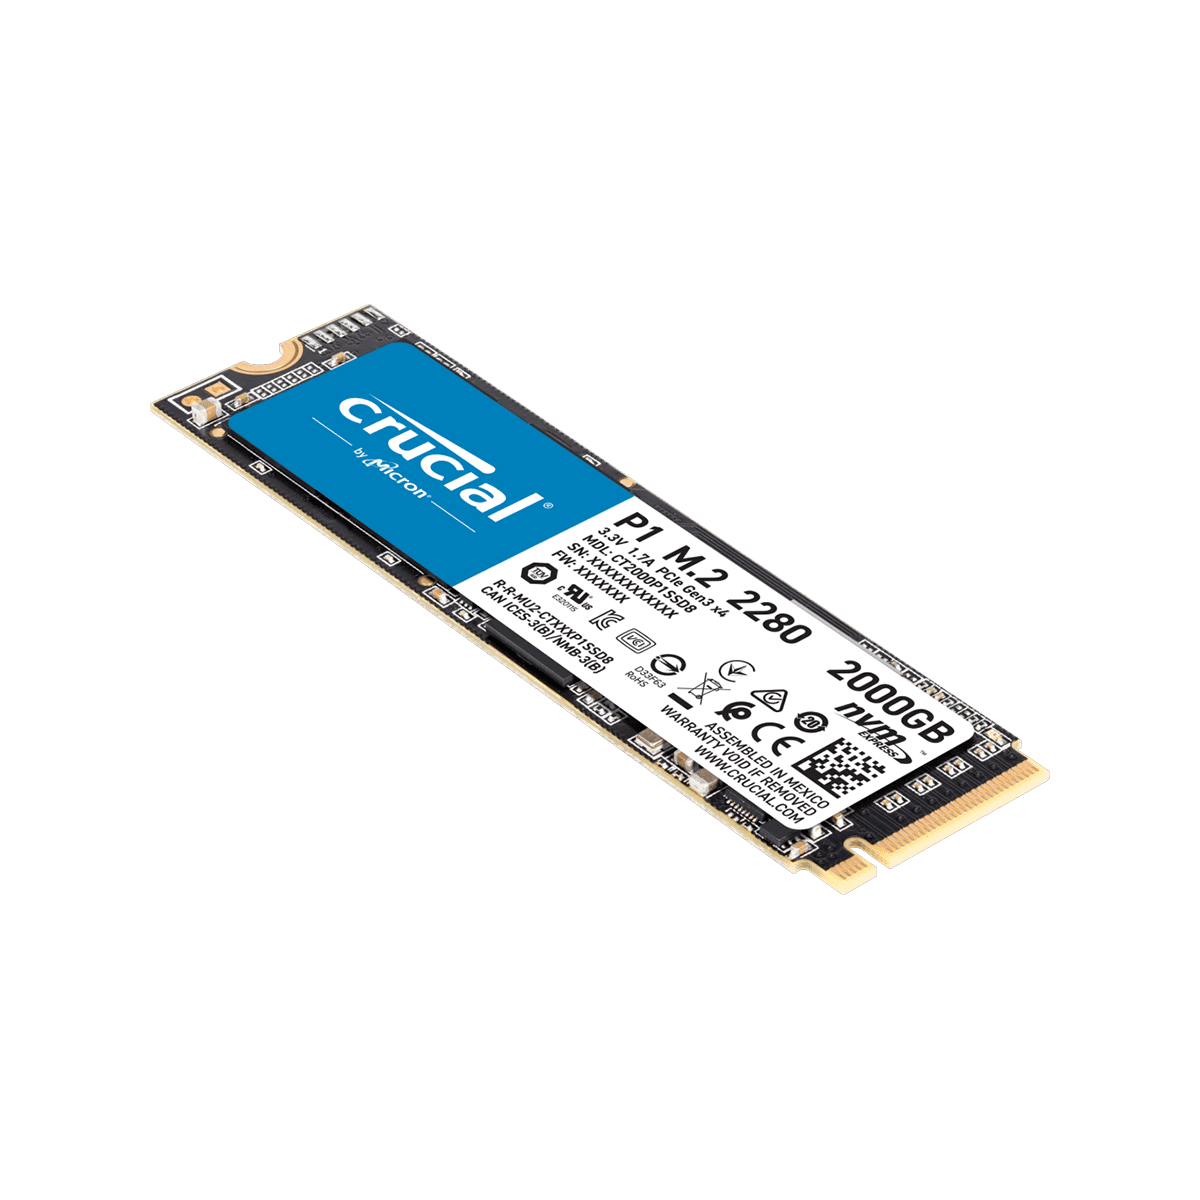 Crucial SSD 500GB M.2 NVMe接続